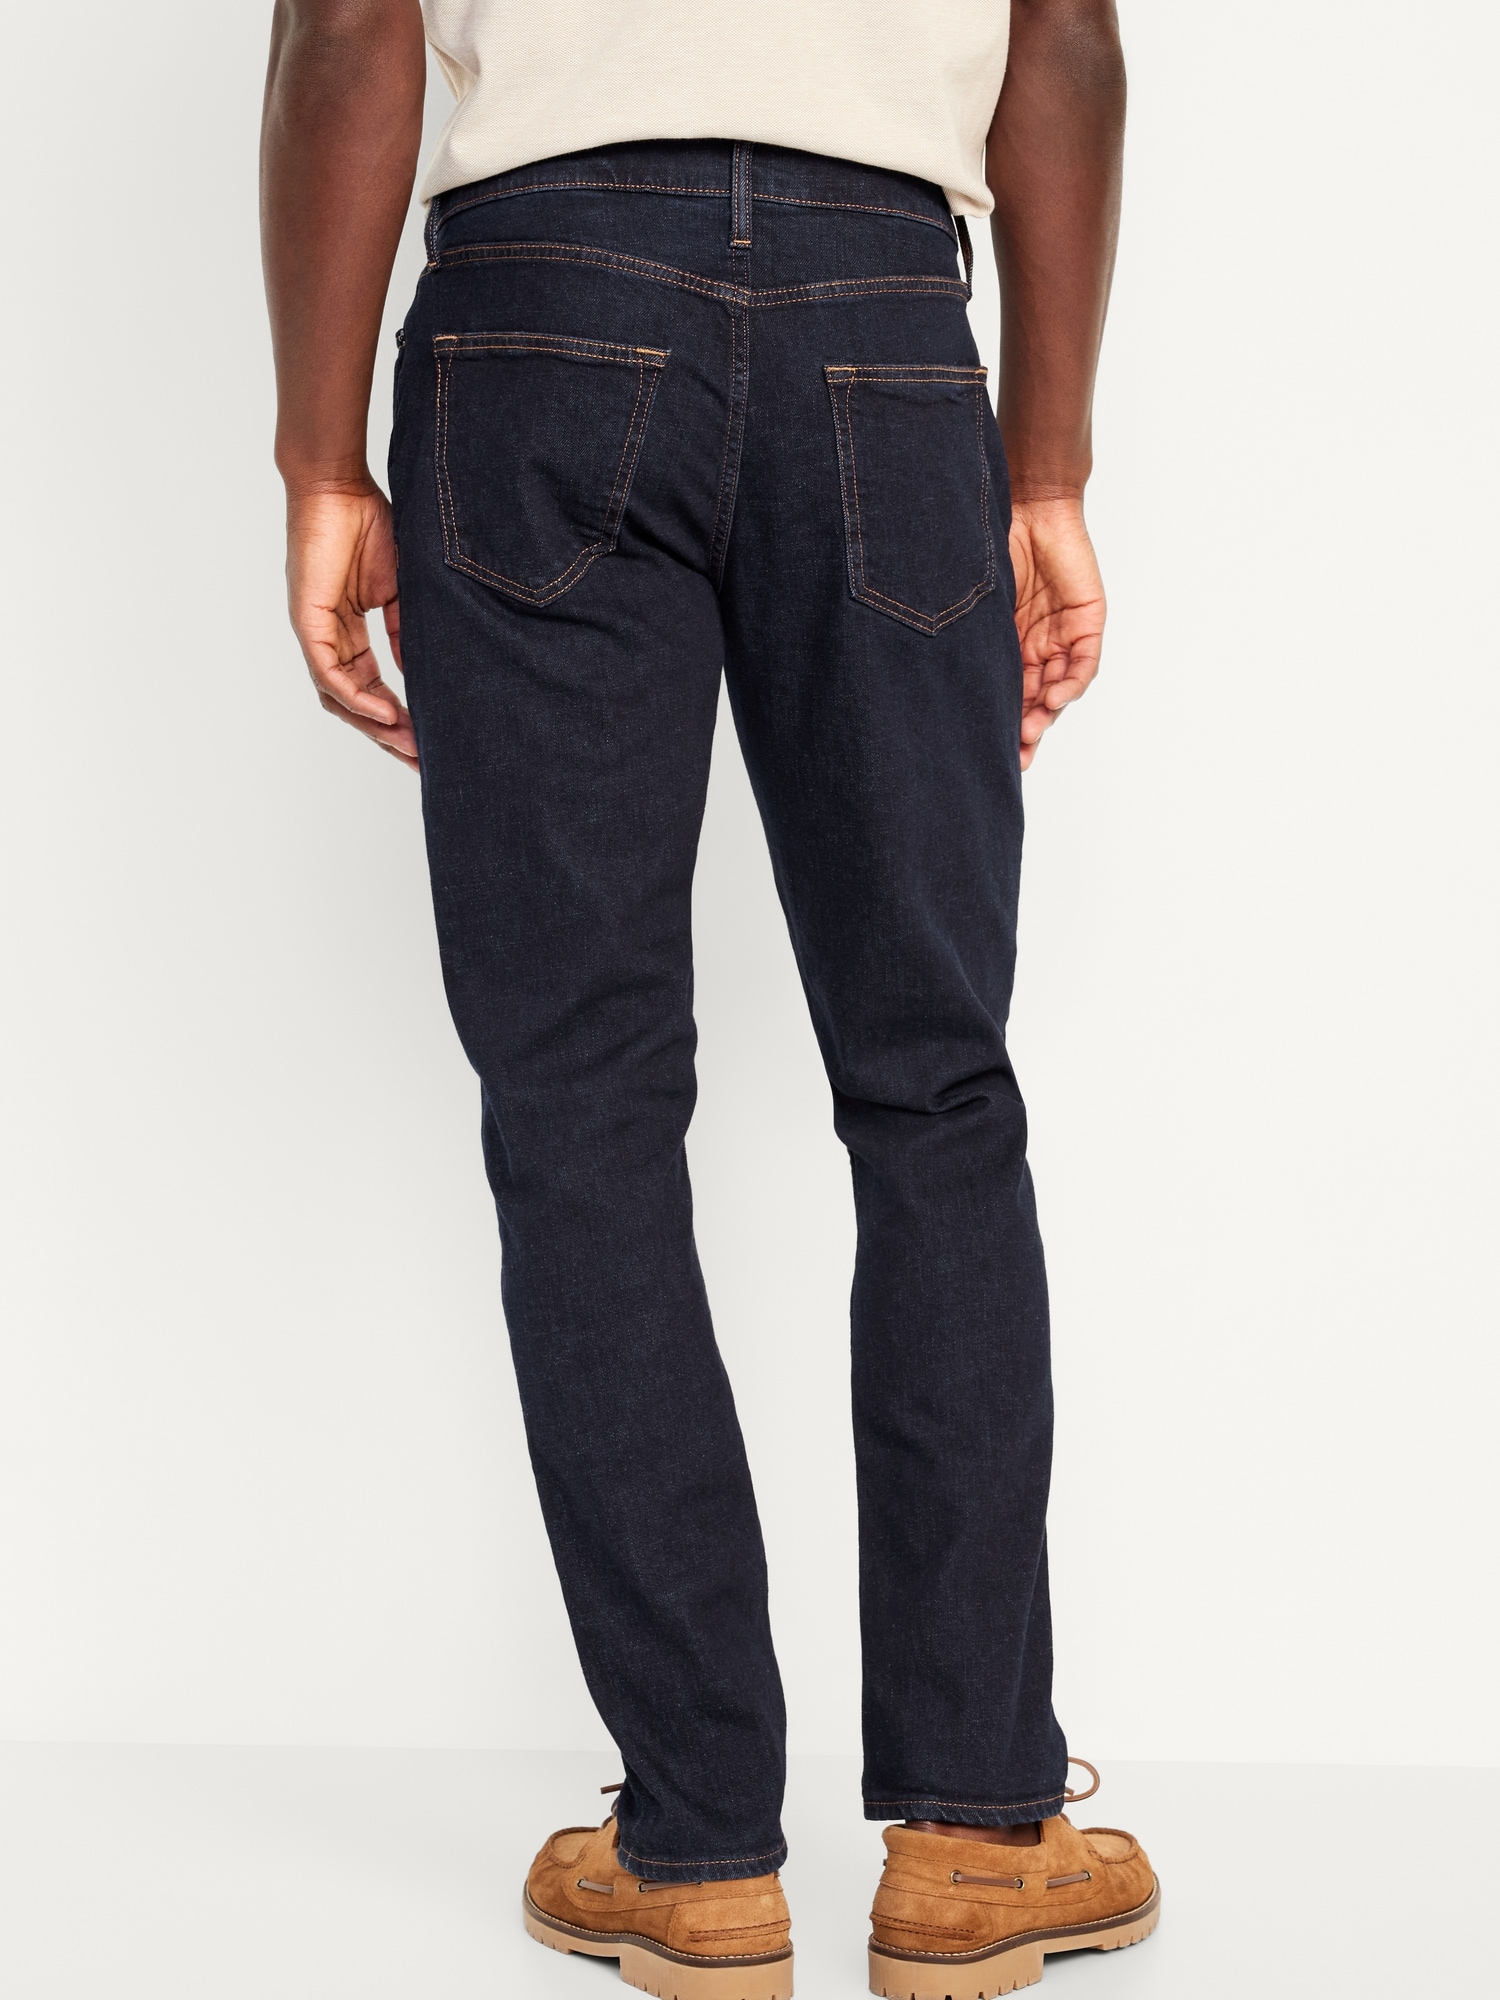 Men's Signature 5-Pocket Stretch Jeans, Slim Taper